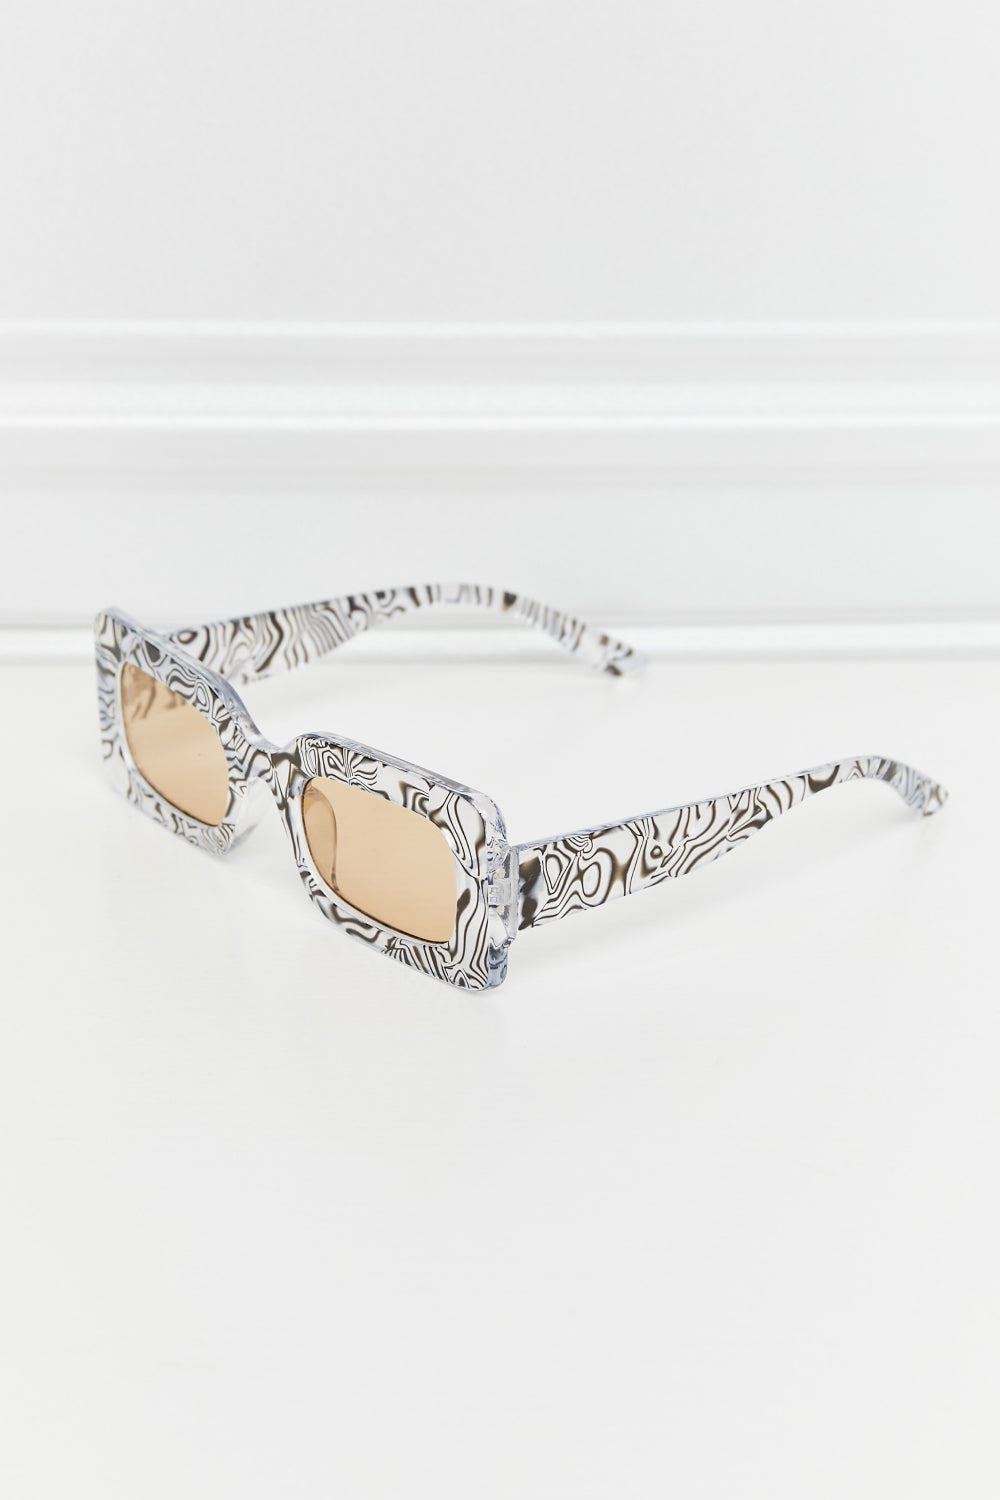 Tortoiseshell Rectangle Polycarbonate Sunglasses - Shop women apparel, Jewelry, bath & beauty products online - Arwen's Boutique